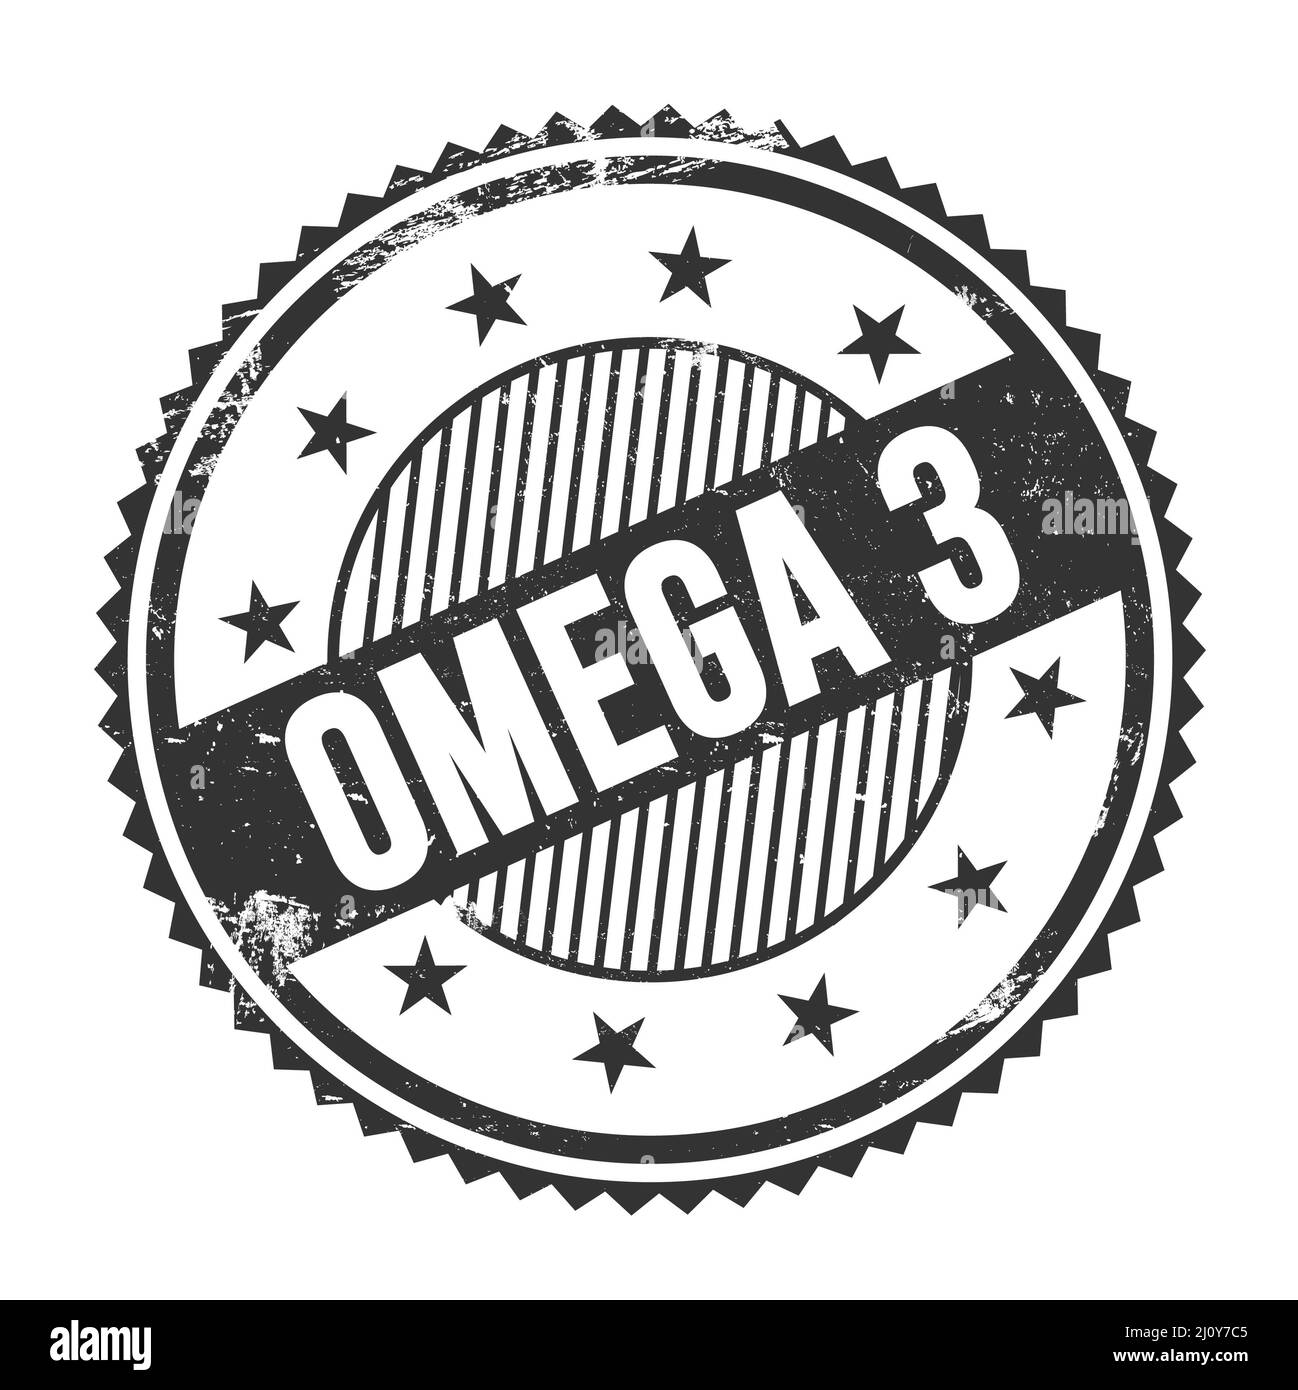 OMEGA 3 text written on black grungy zig zag borders round stamp. Stock Photo